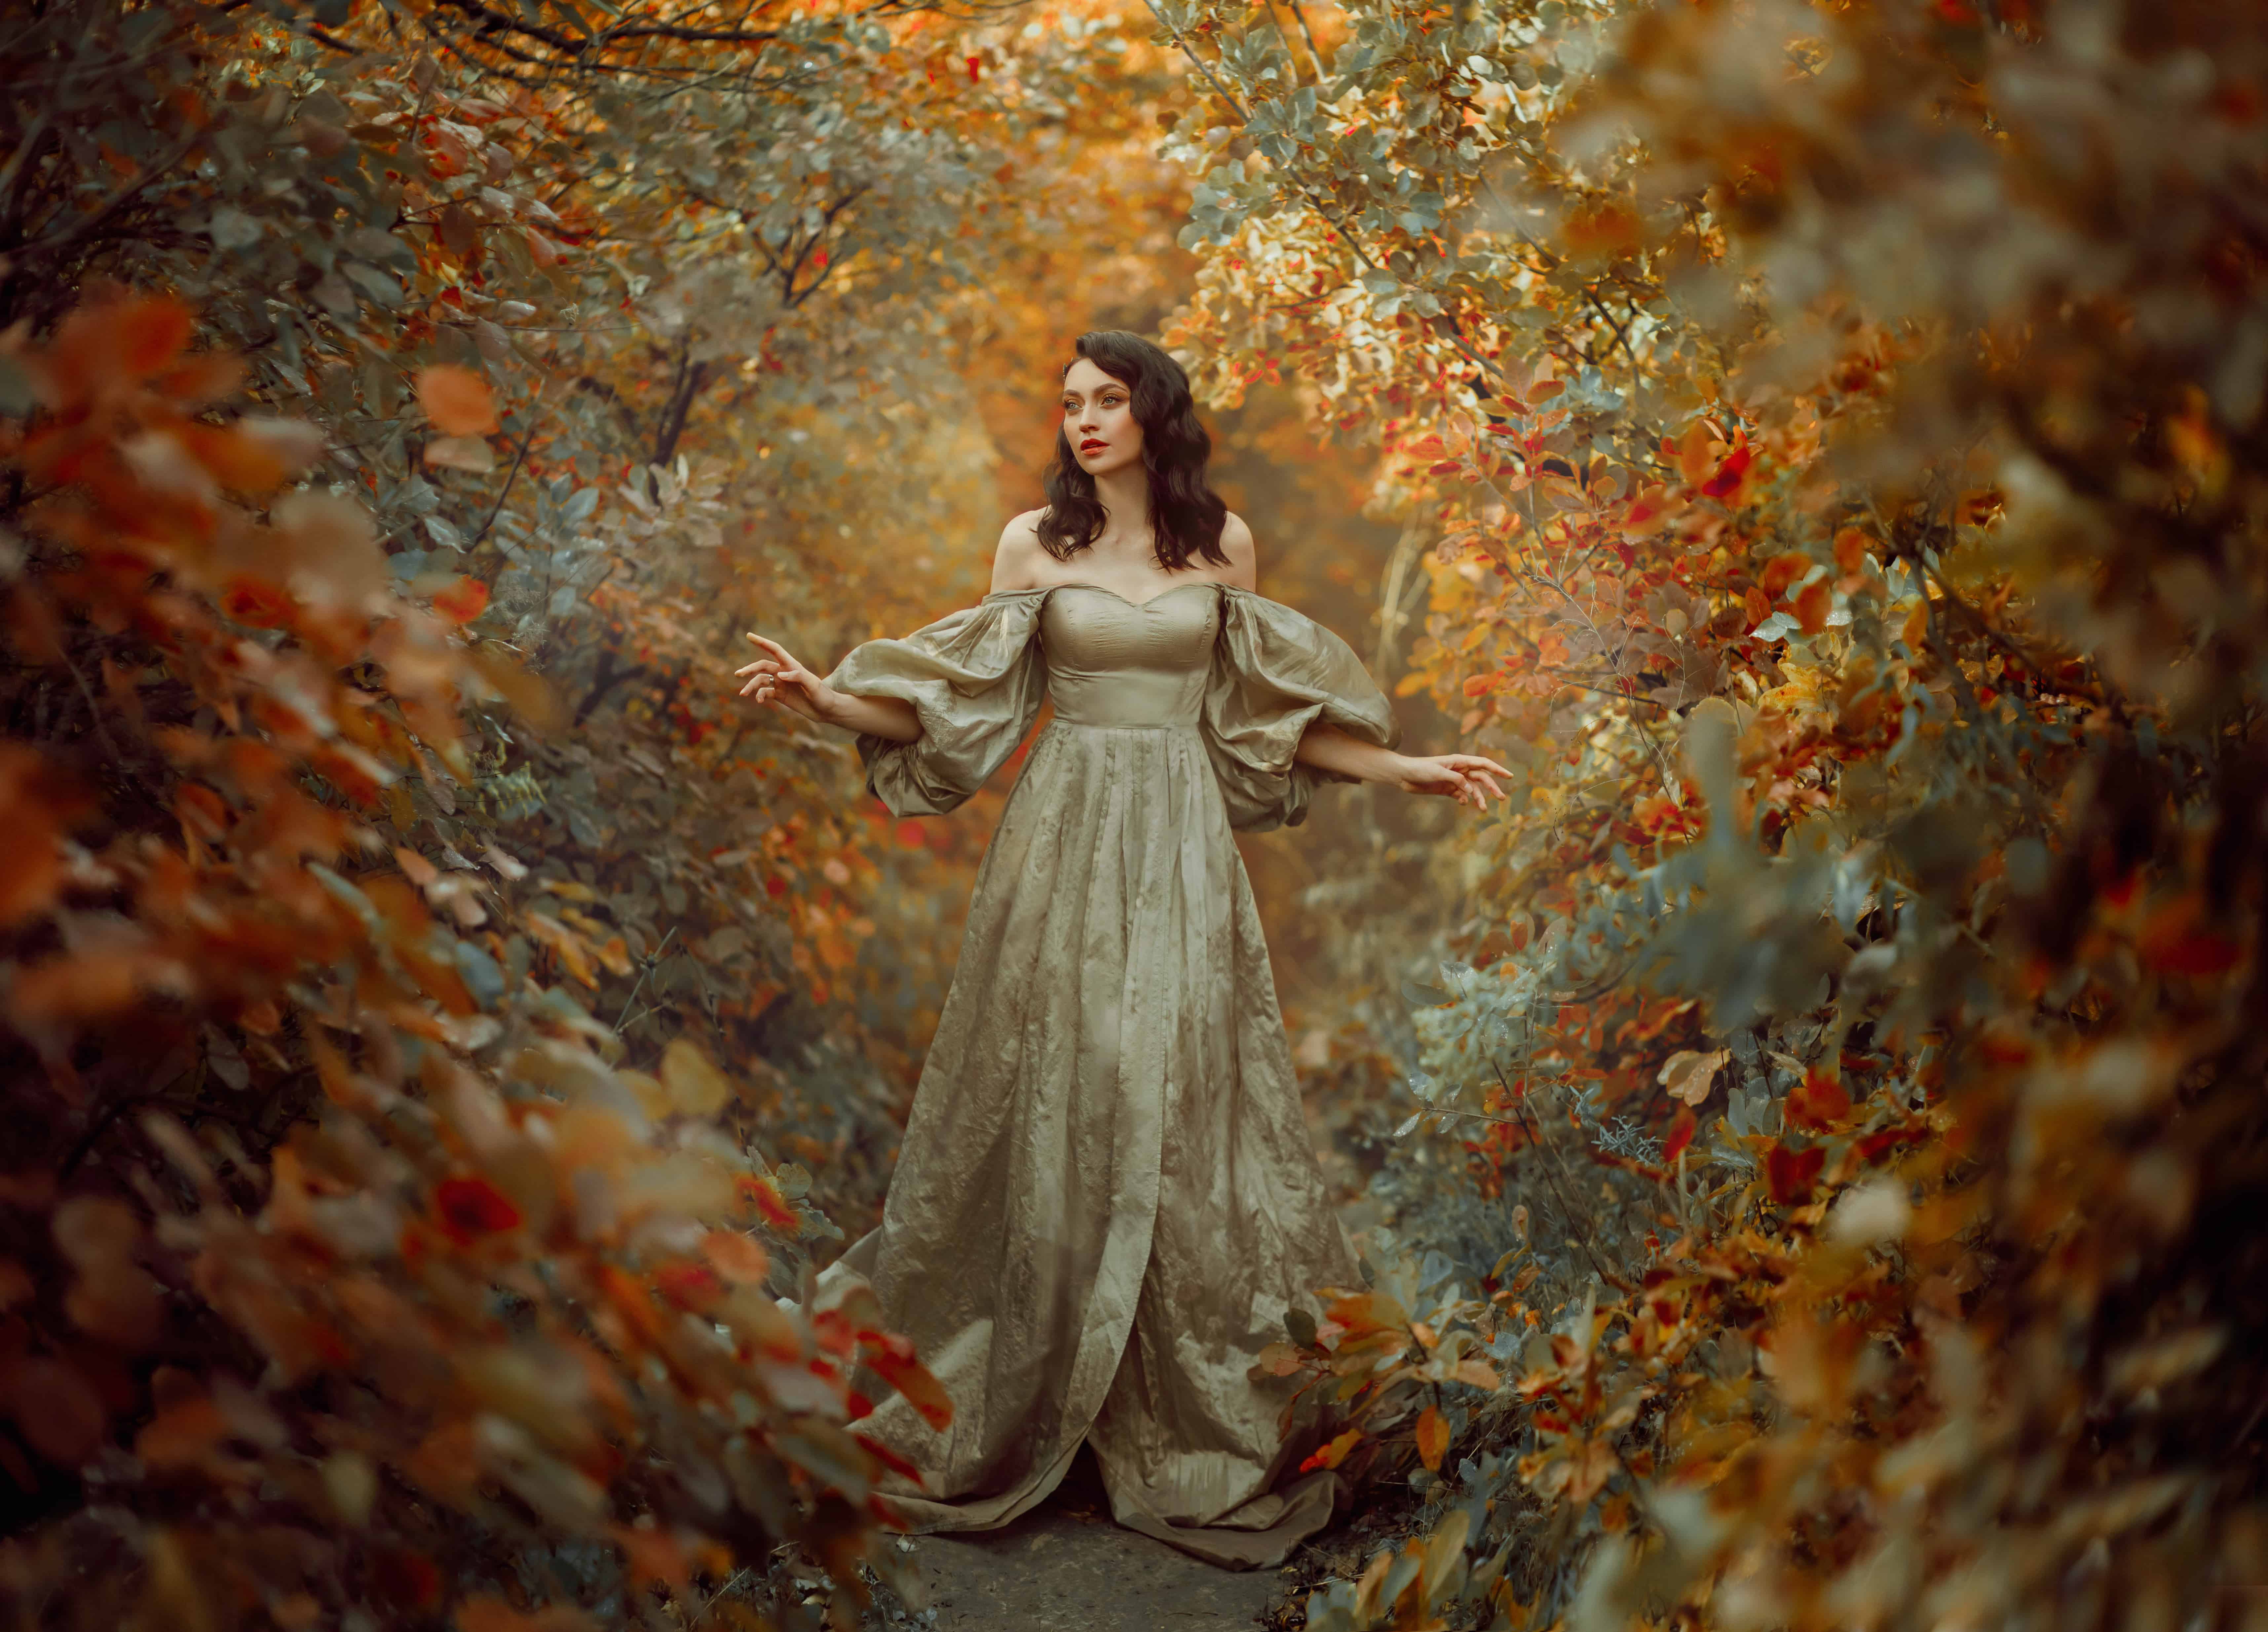 Queen fantasy woman walks in path mystical autumn forest. 